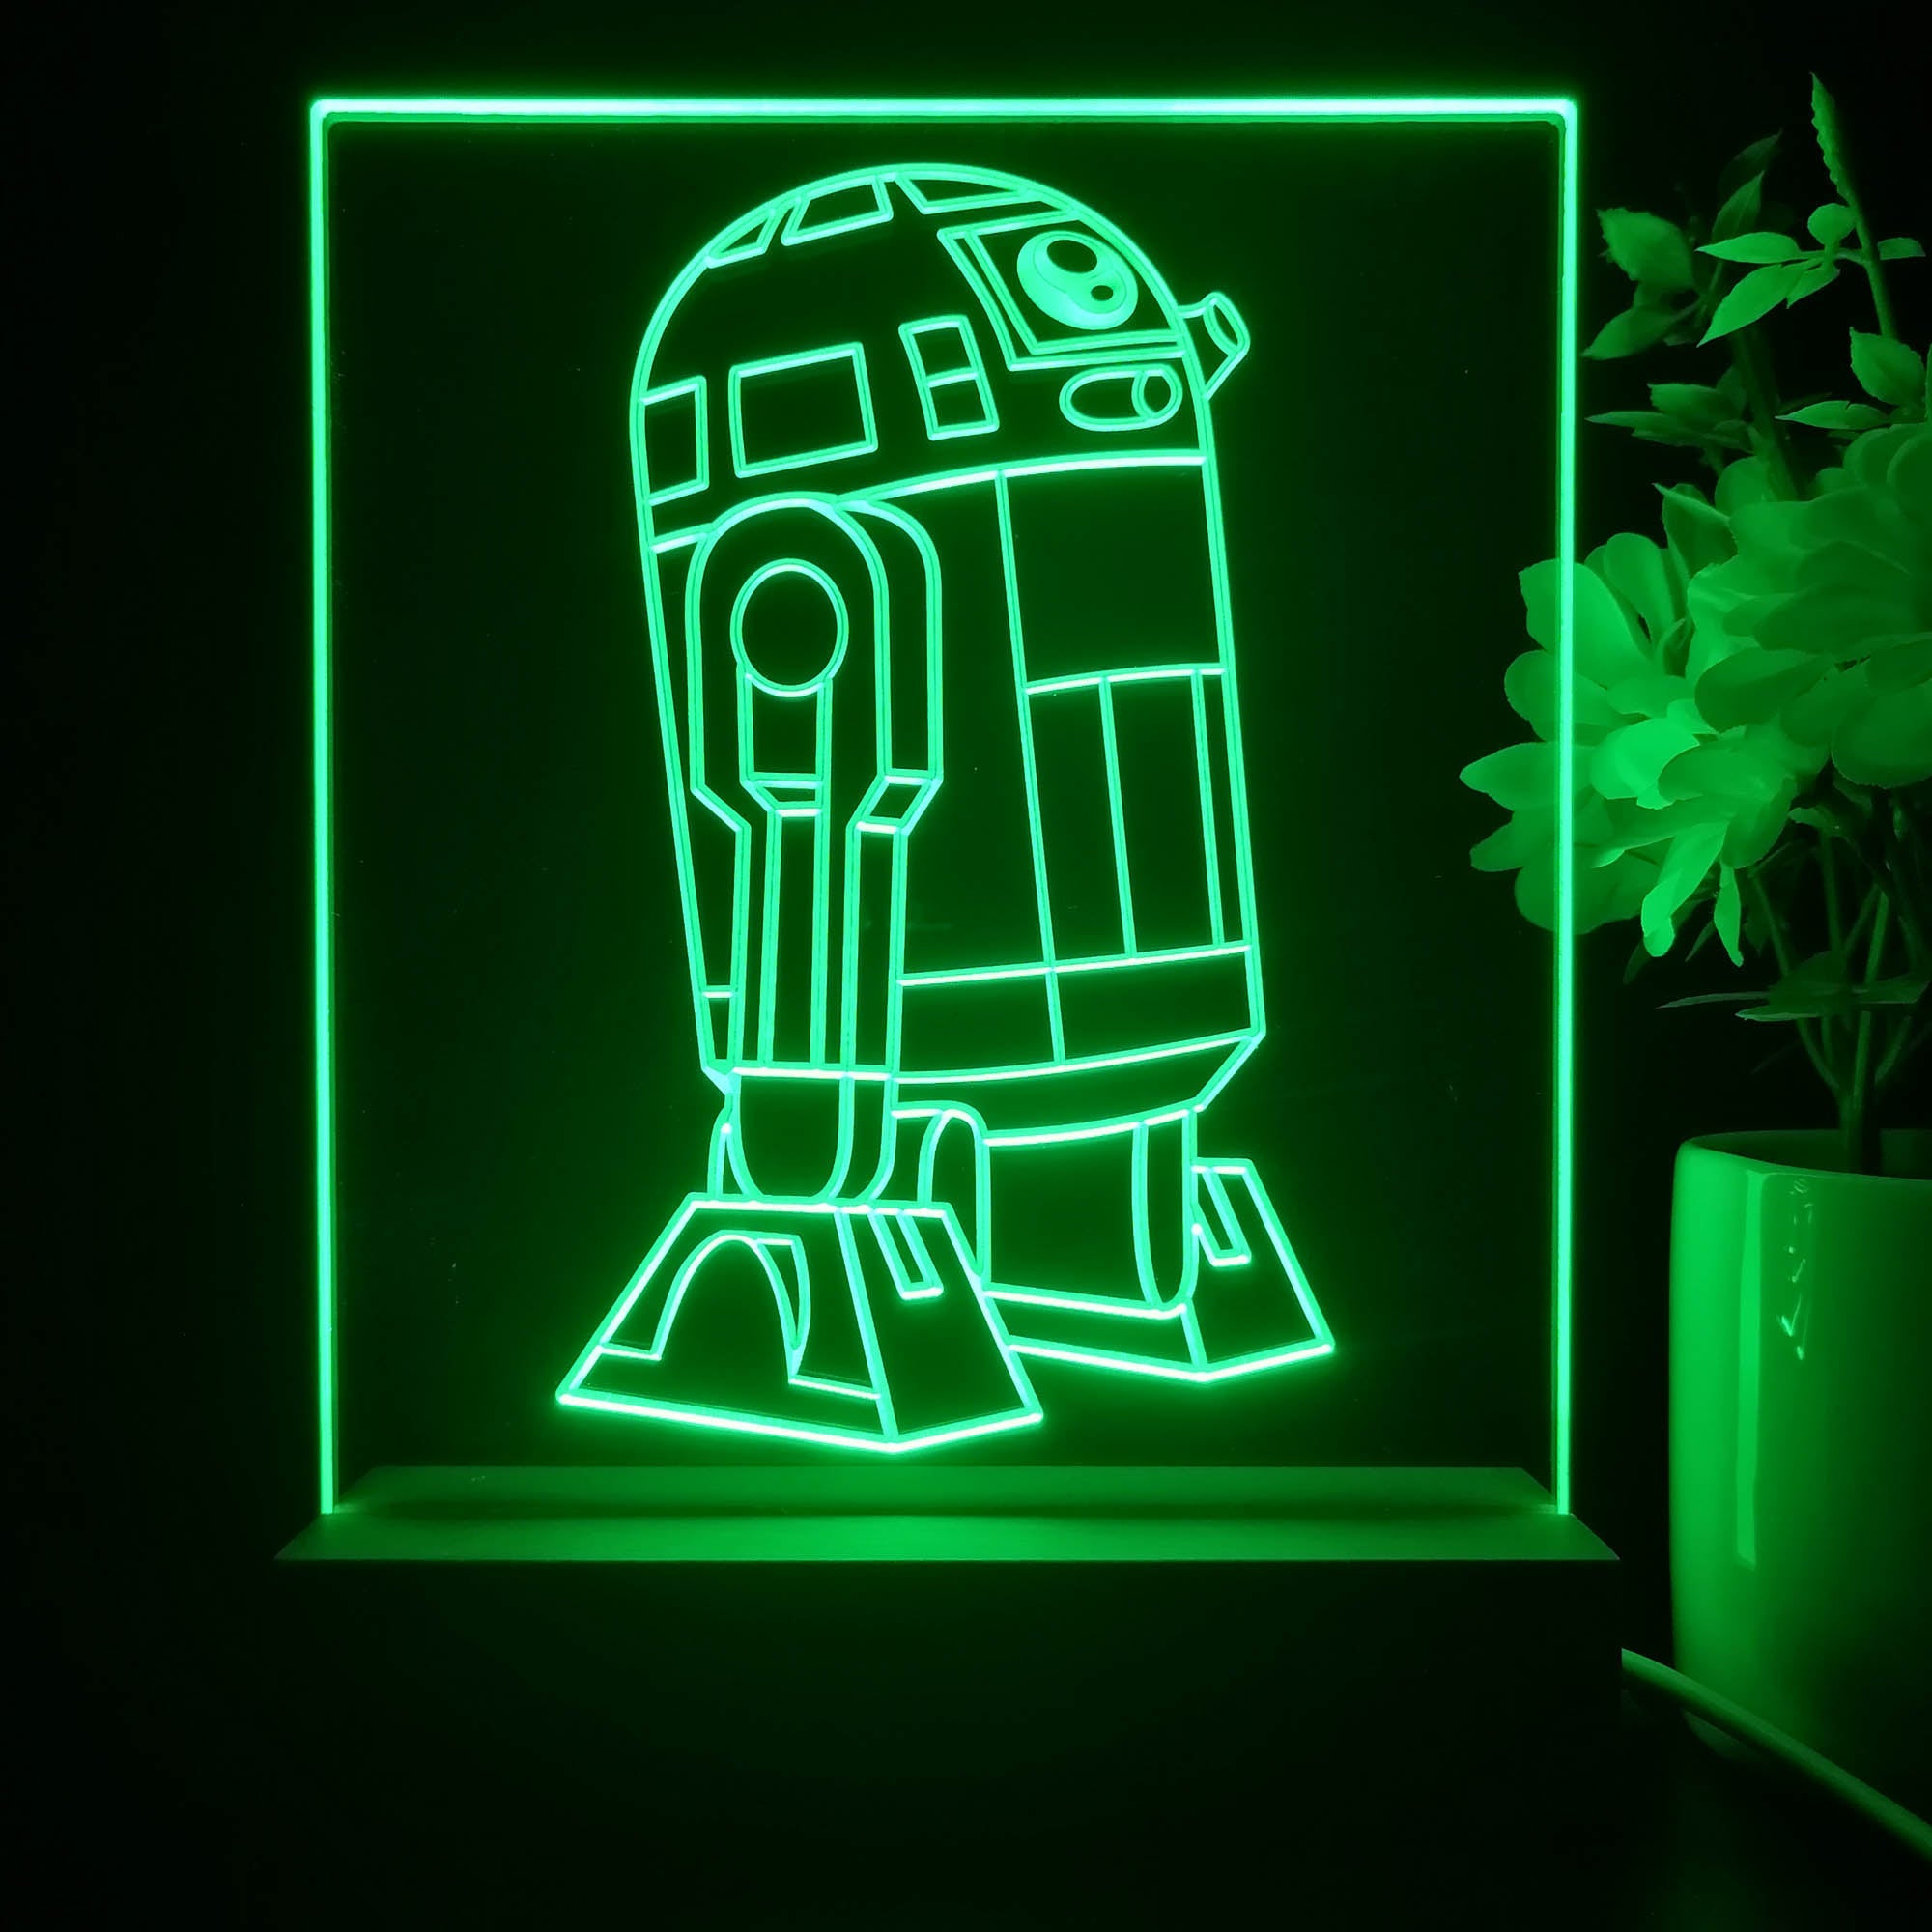 R2D2 Star Wars Game Room LED Sign Lamp Display